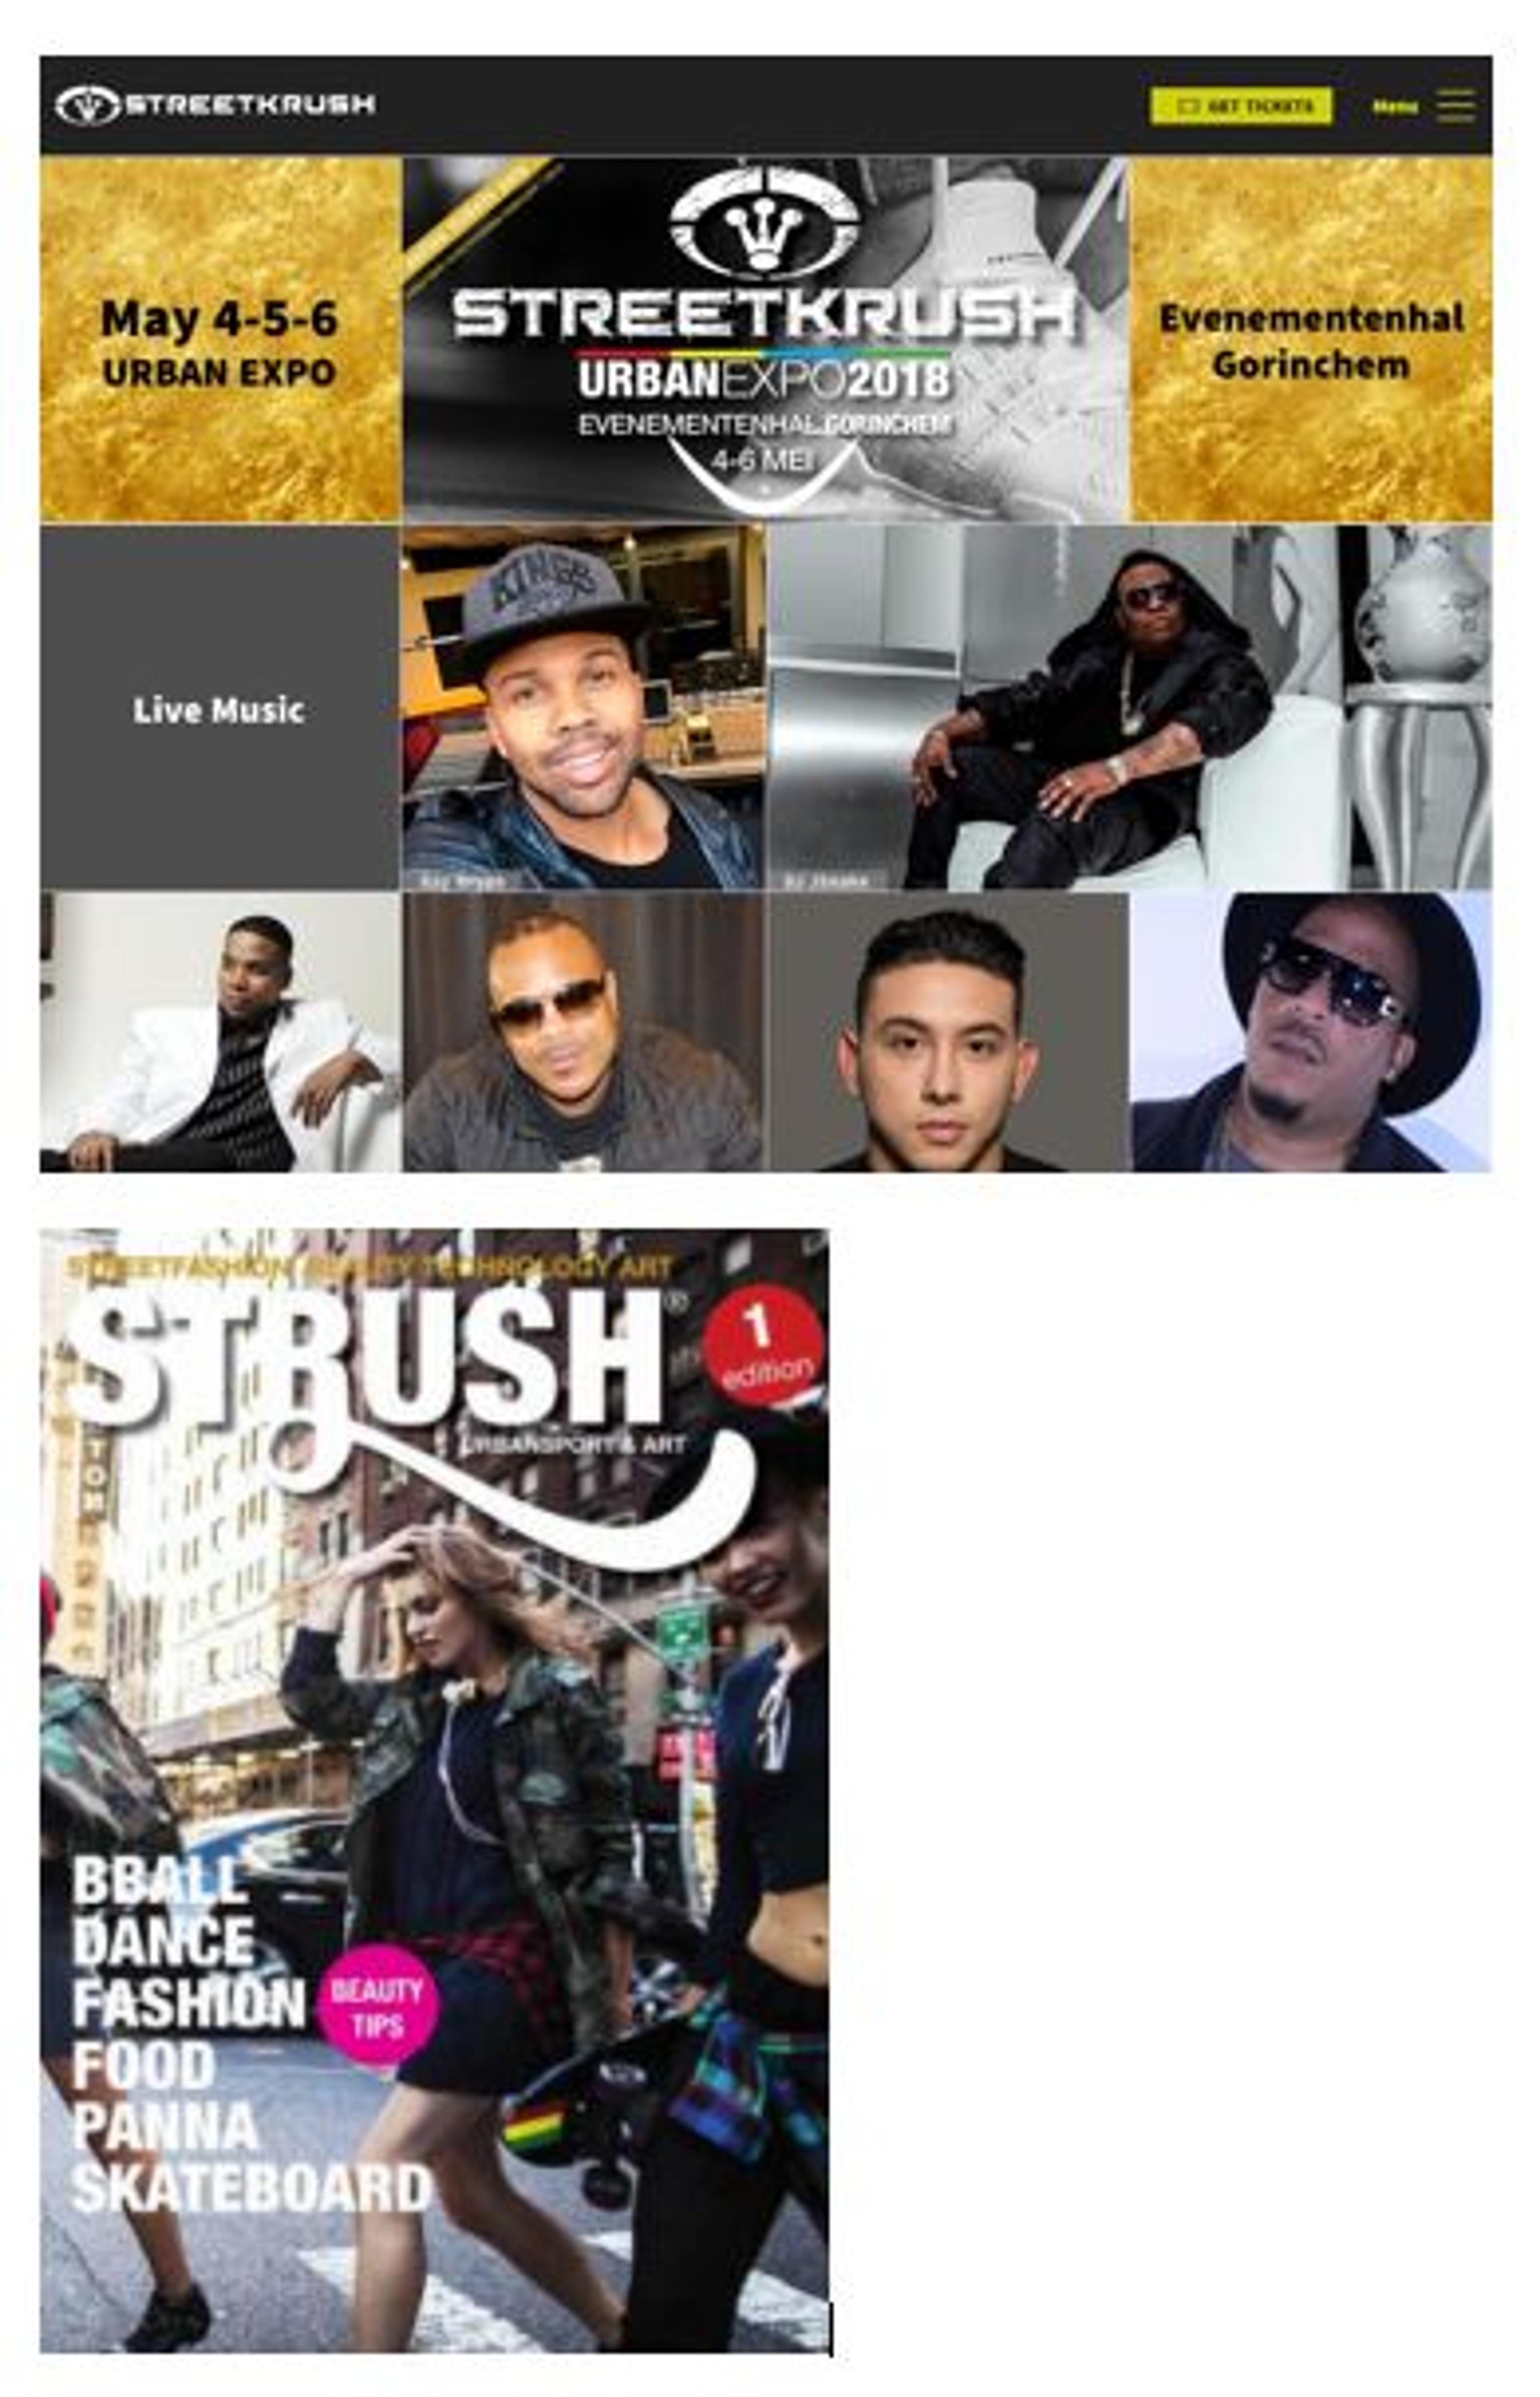 Nieuw urban event 'StreetKrush' en magazine 'Strush'